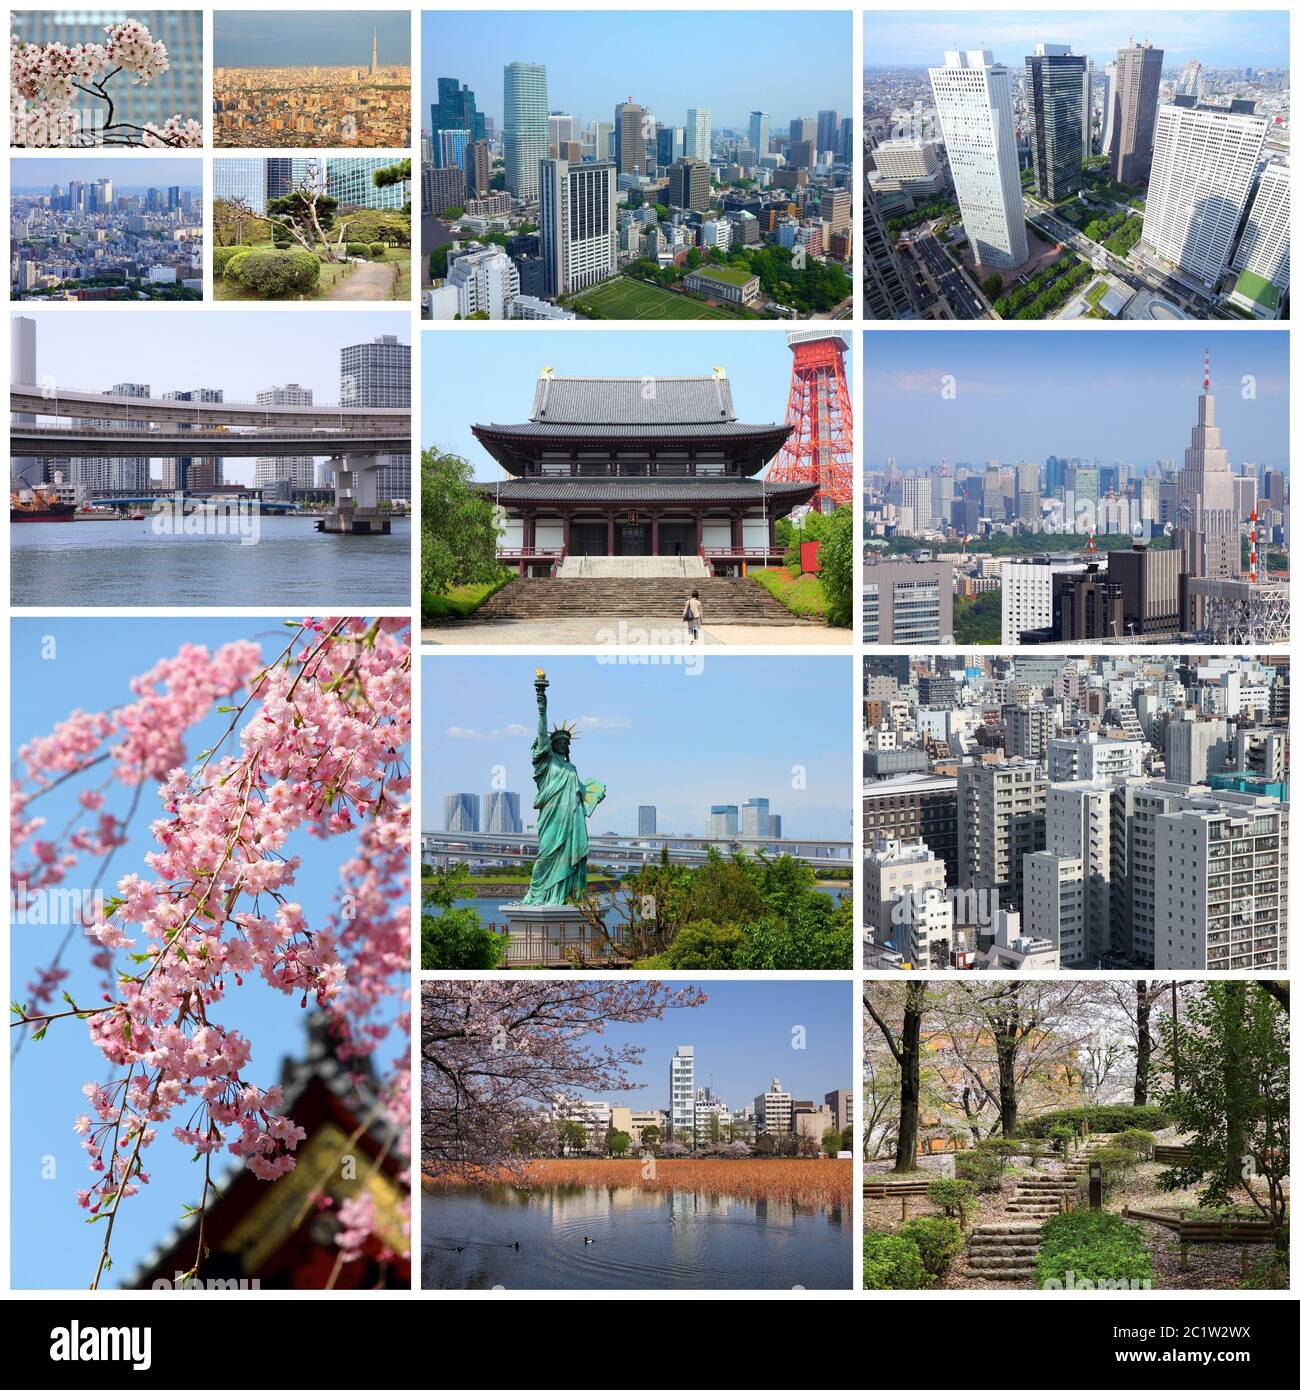 Tokyo Japan Photos Set Collage Includes Major Landmarks Like Shinjuku Ward Ueno Park Chiyoda And Bunkyo Stock Photo Alamy